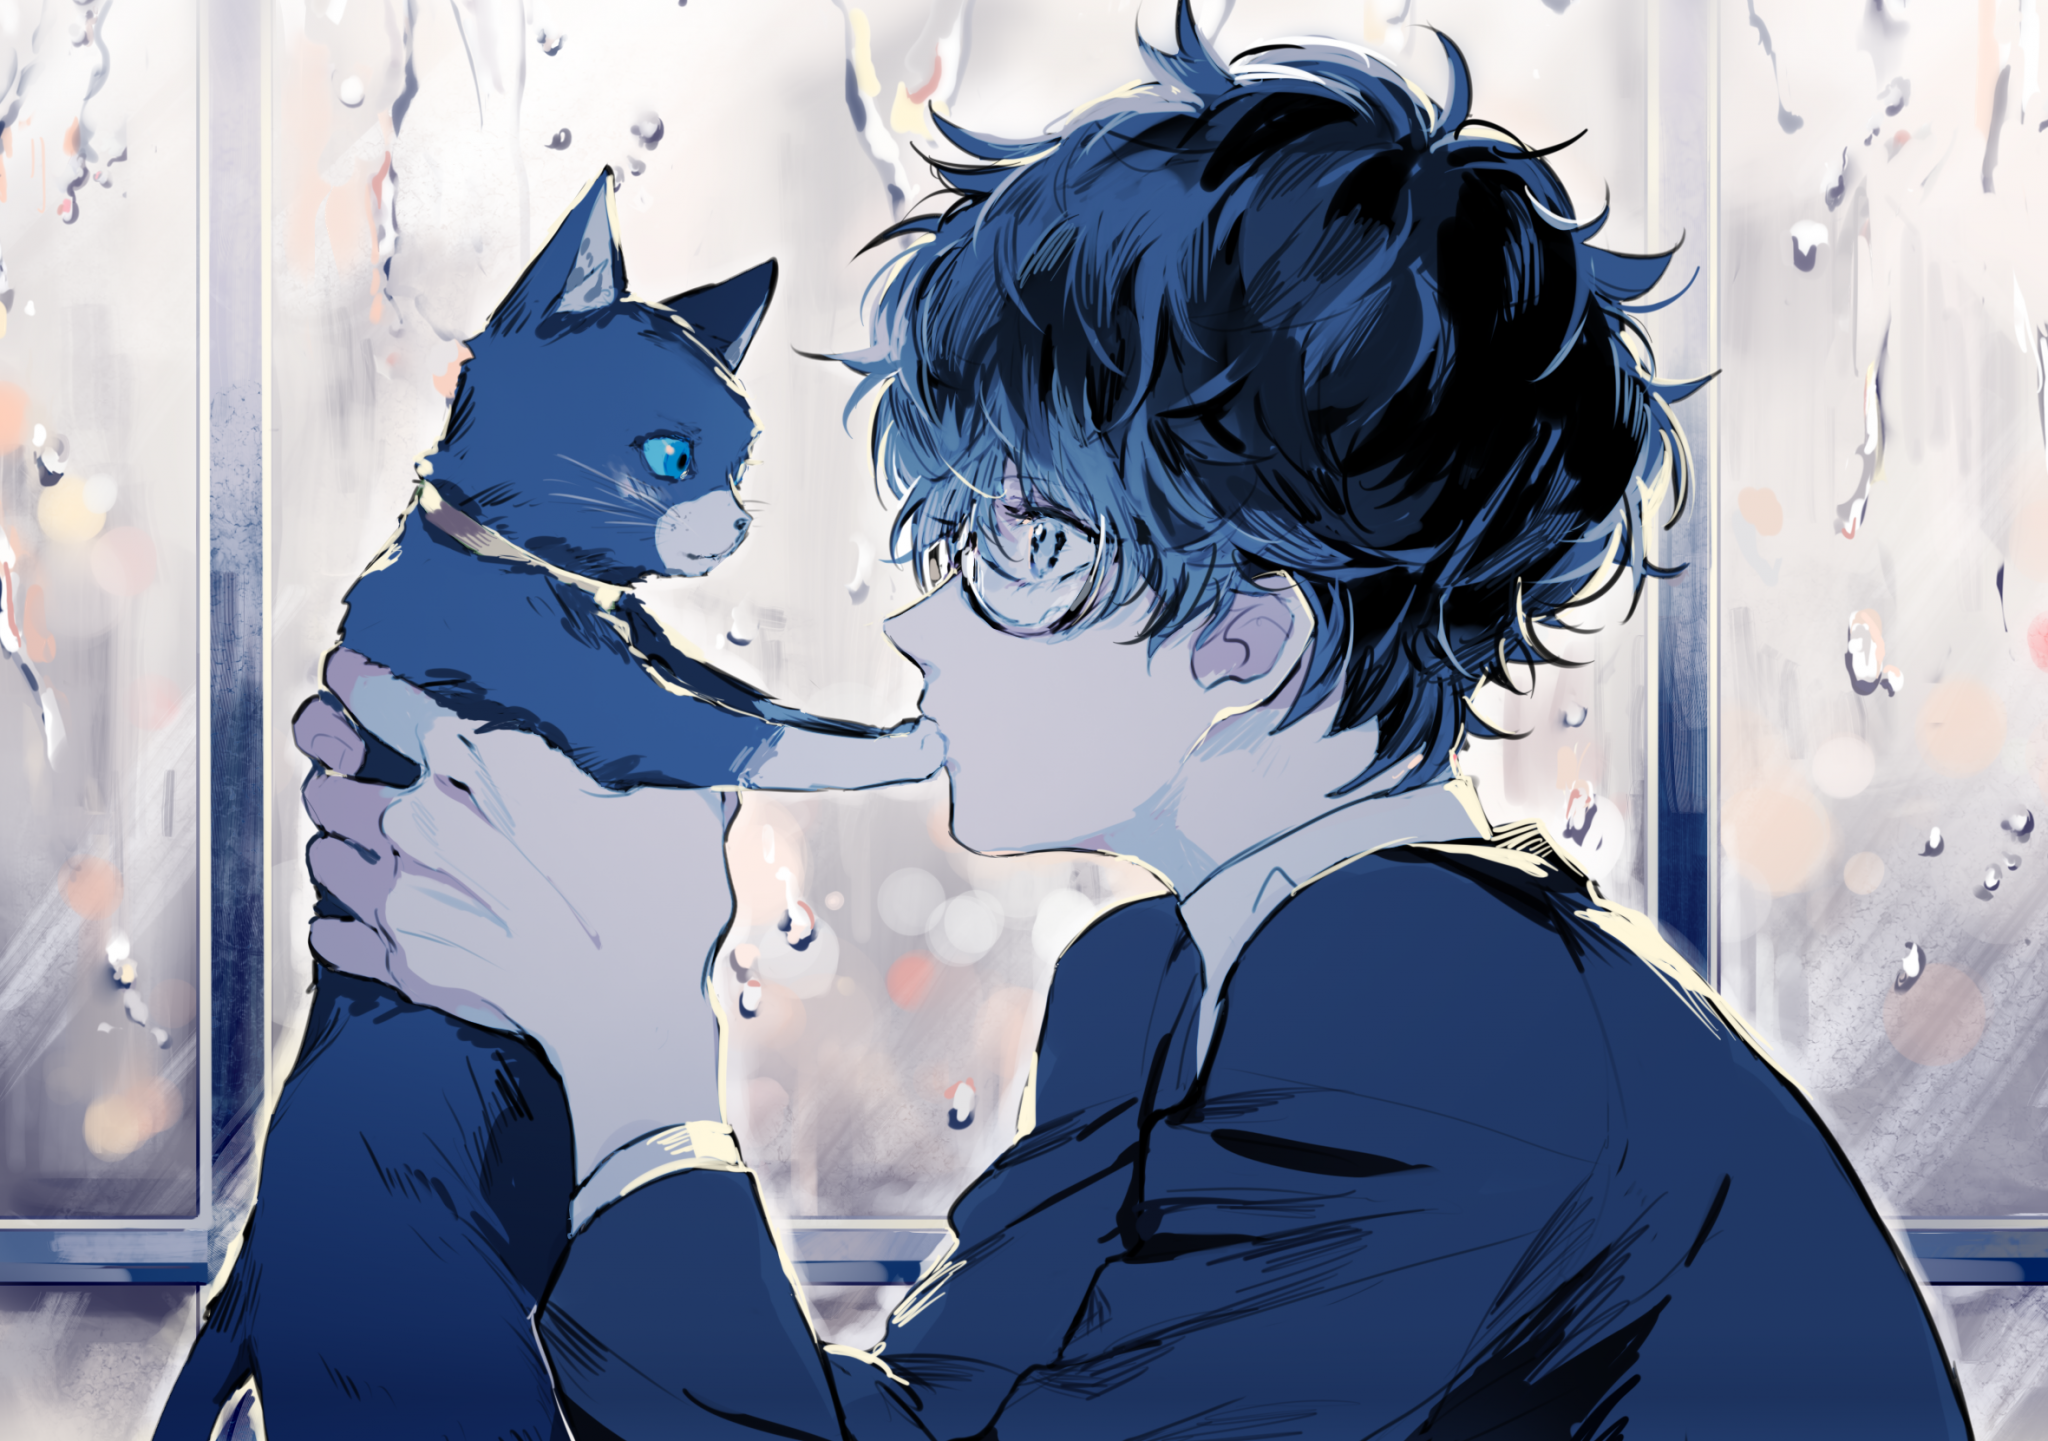 Download 2048x1441 Persona 5, Kurusu Akira, Anime Boy, Cat, Glasses, Profile View, Cute Wallpapers